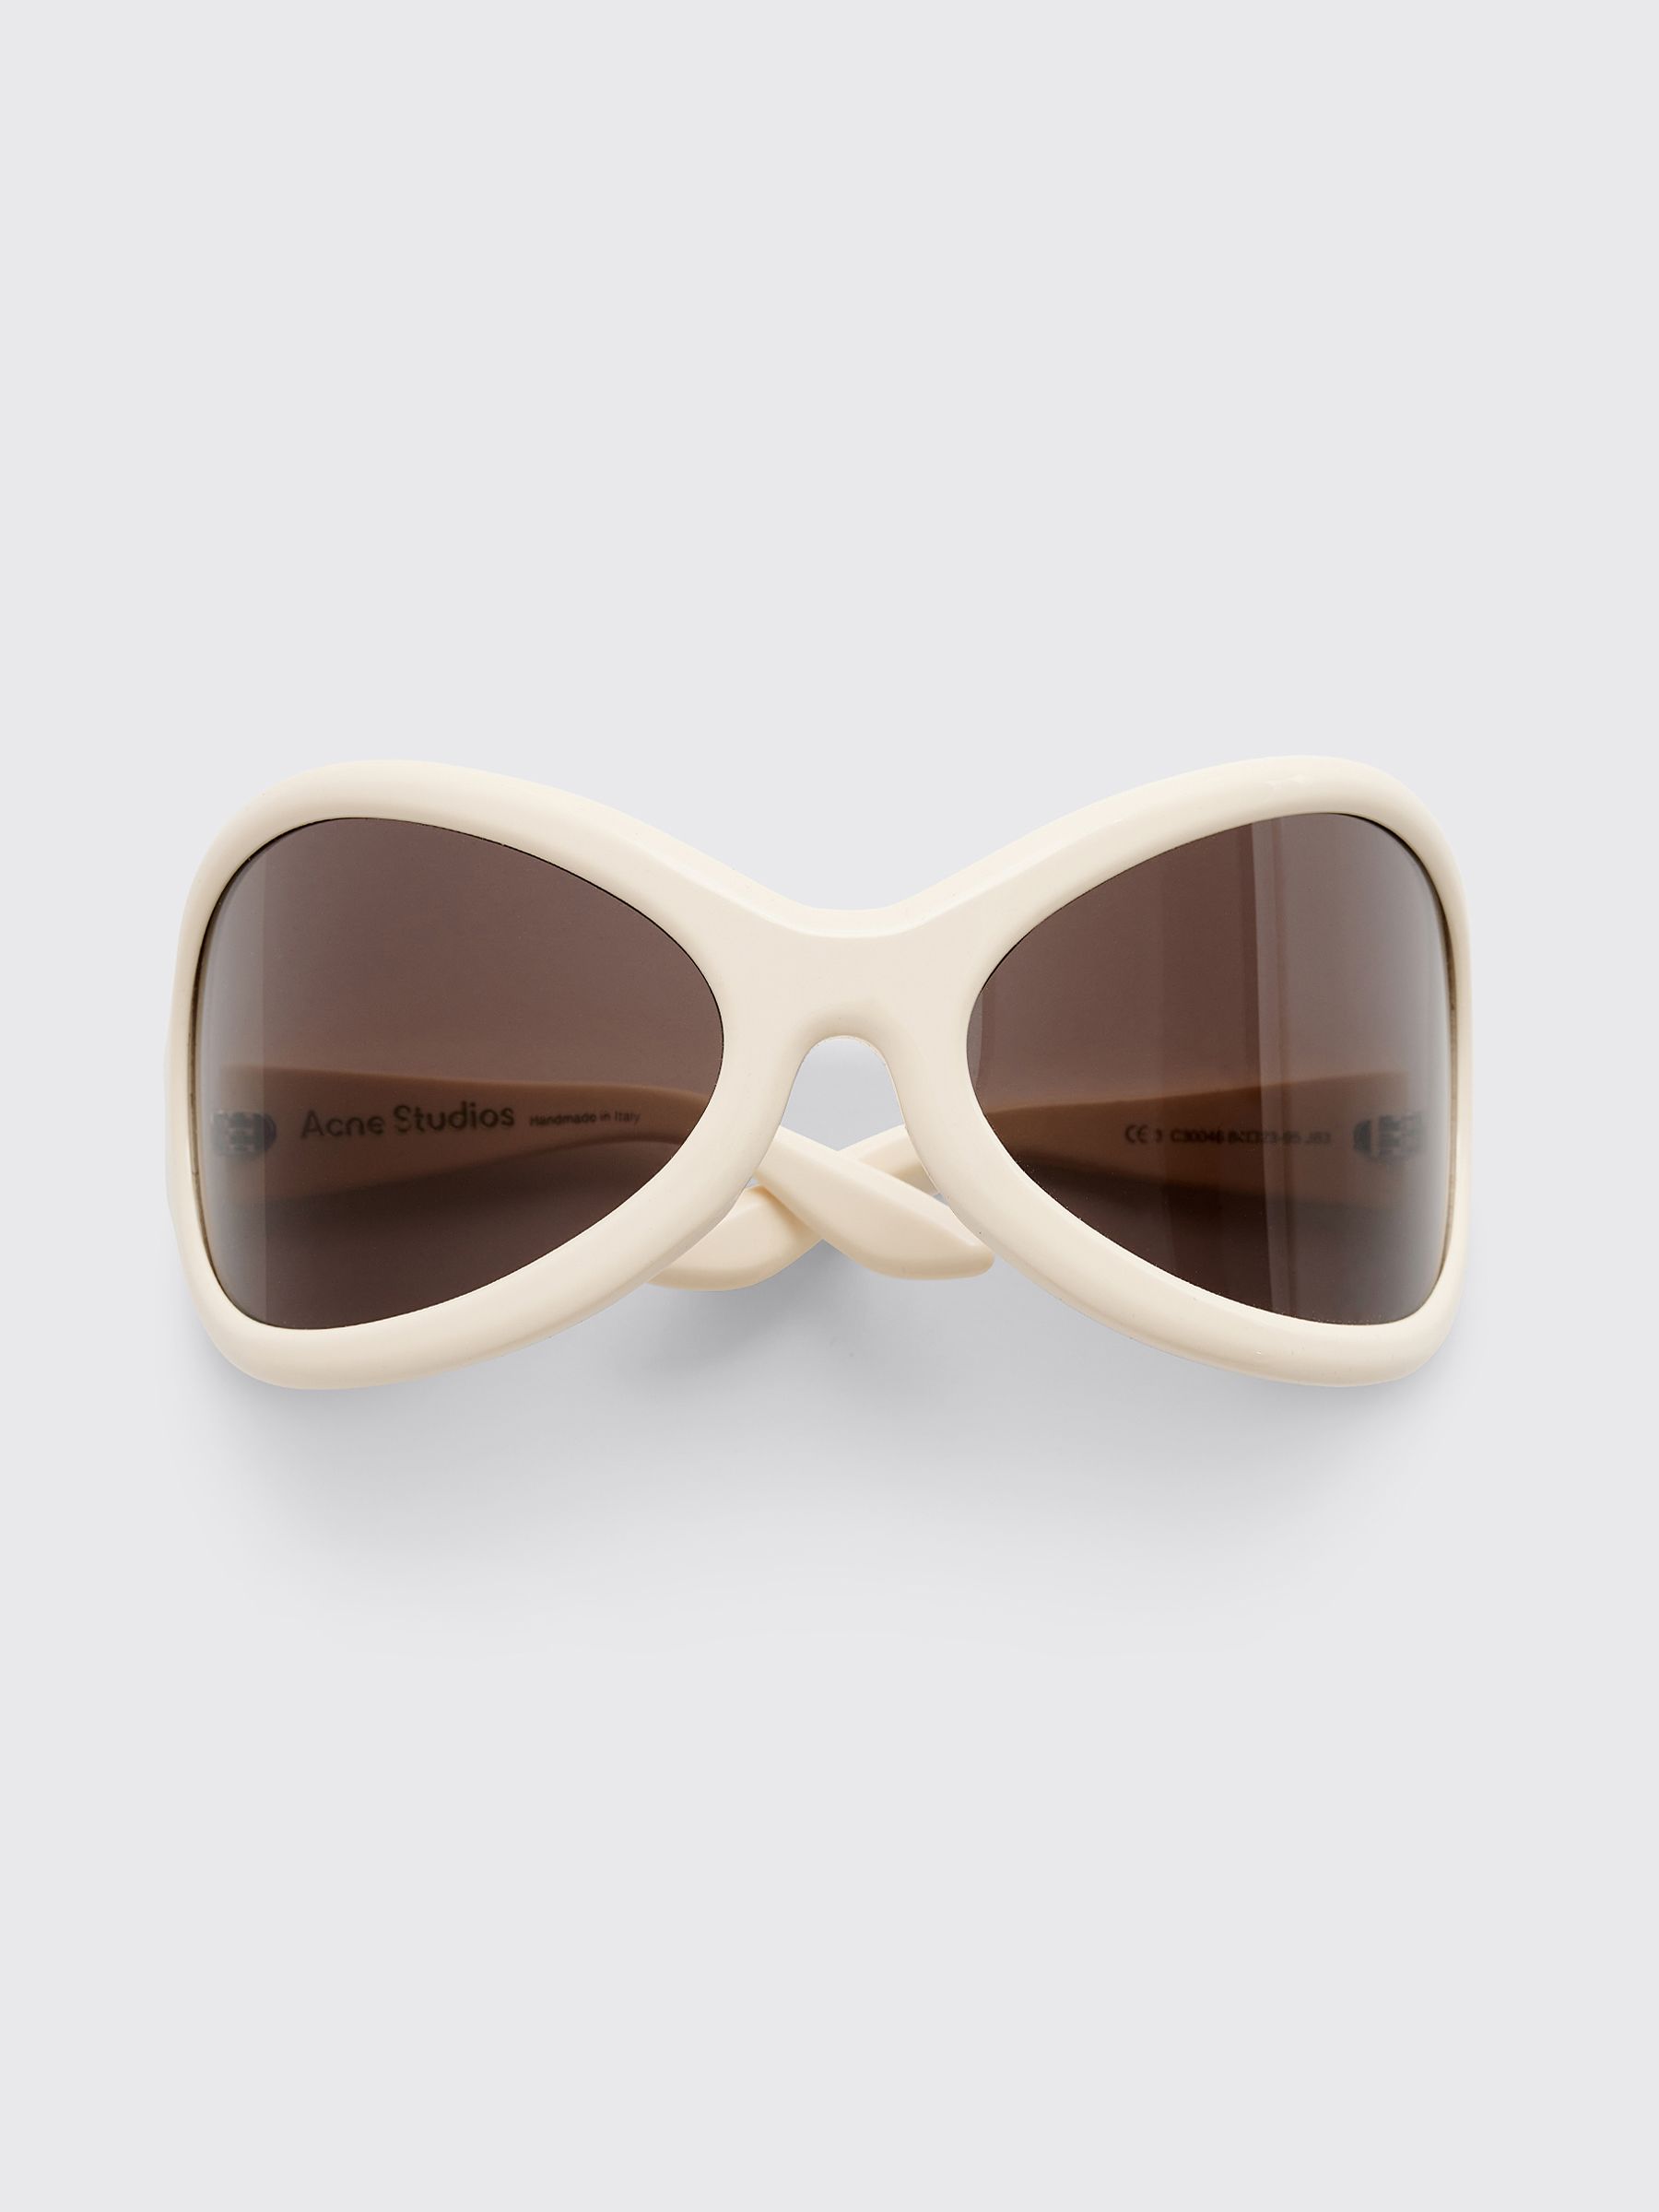 Très Bien - Acne Studios Acetate Sunglasses Black / White